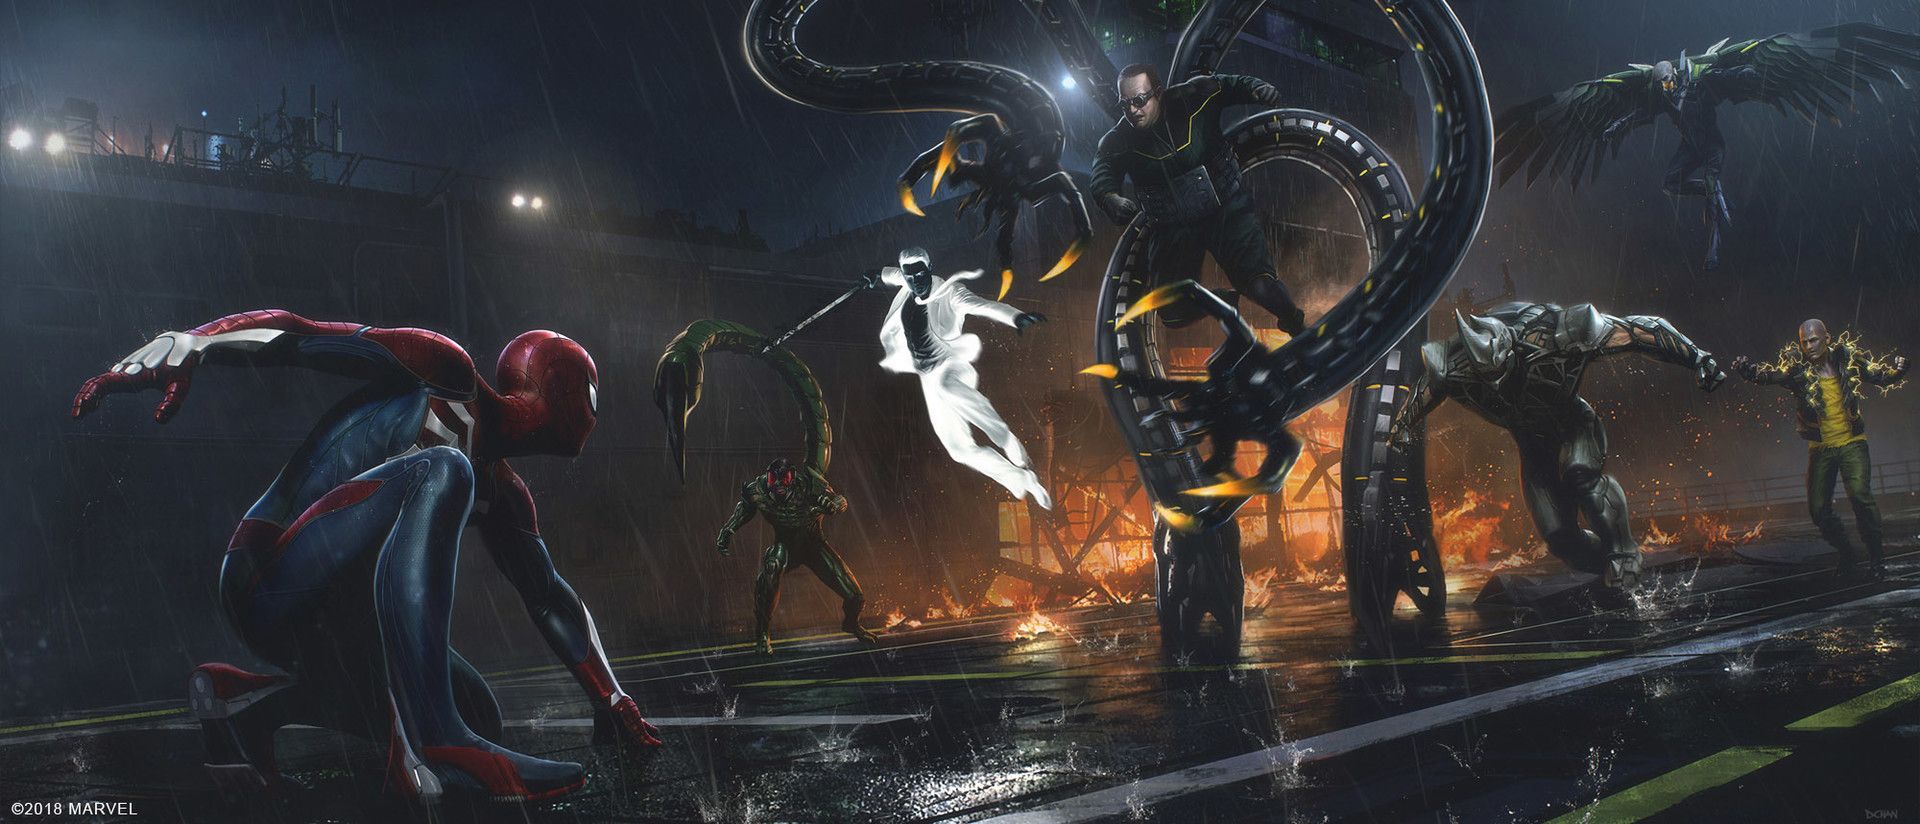 SPIDER MAN PS4: Amazing Keyframe Concept Art Features Doc Ock